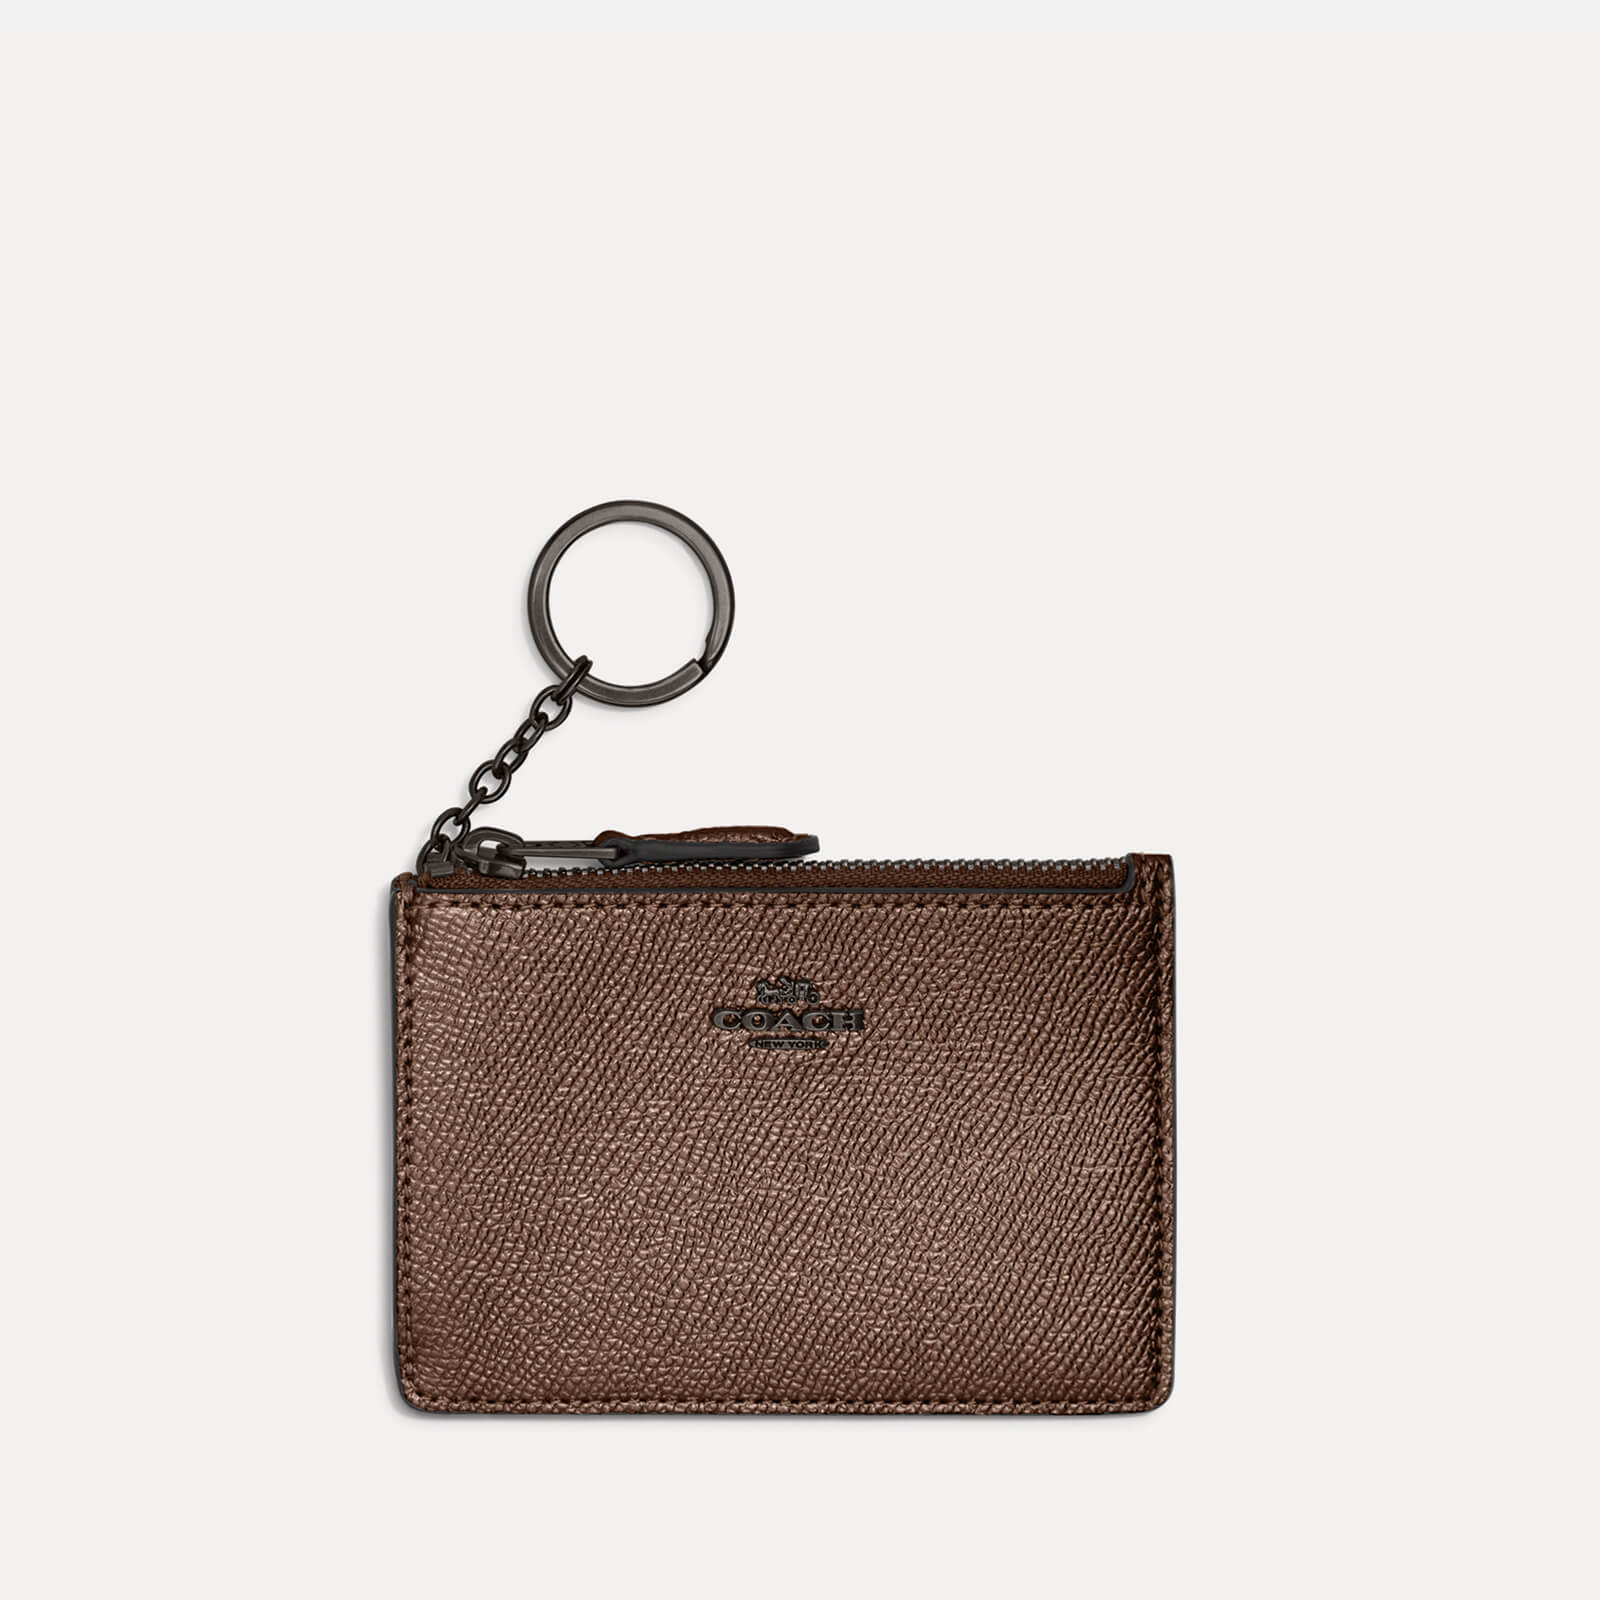 Coach Metallic ID-Window Leather Wallet